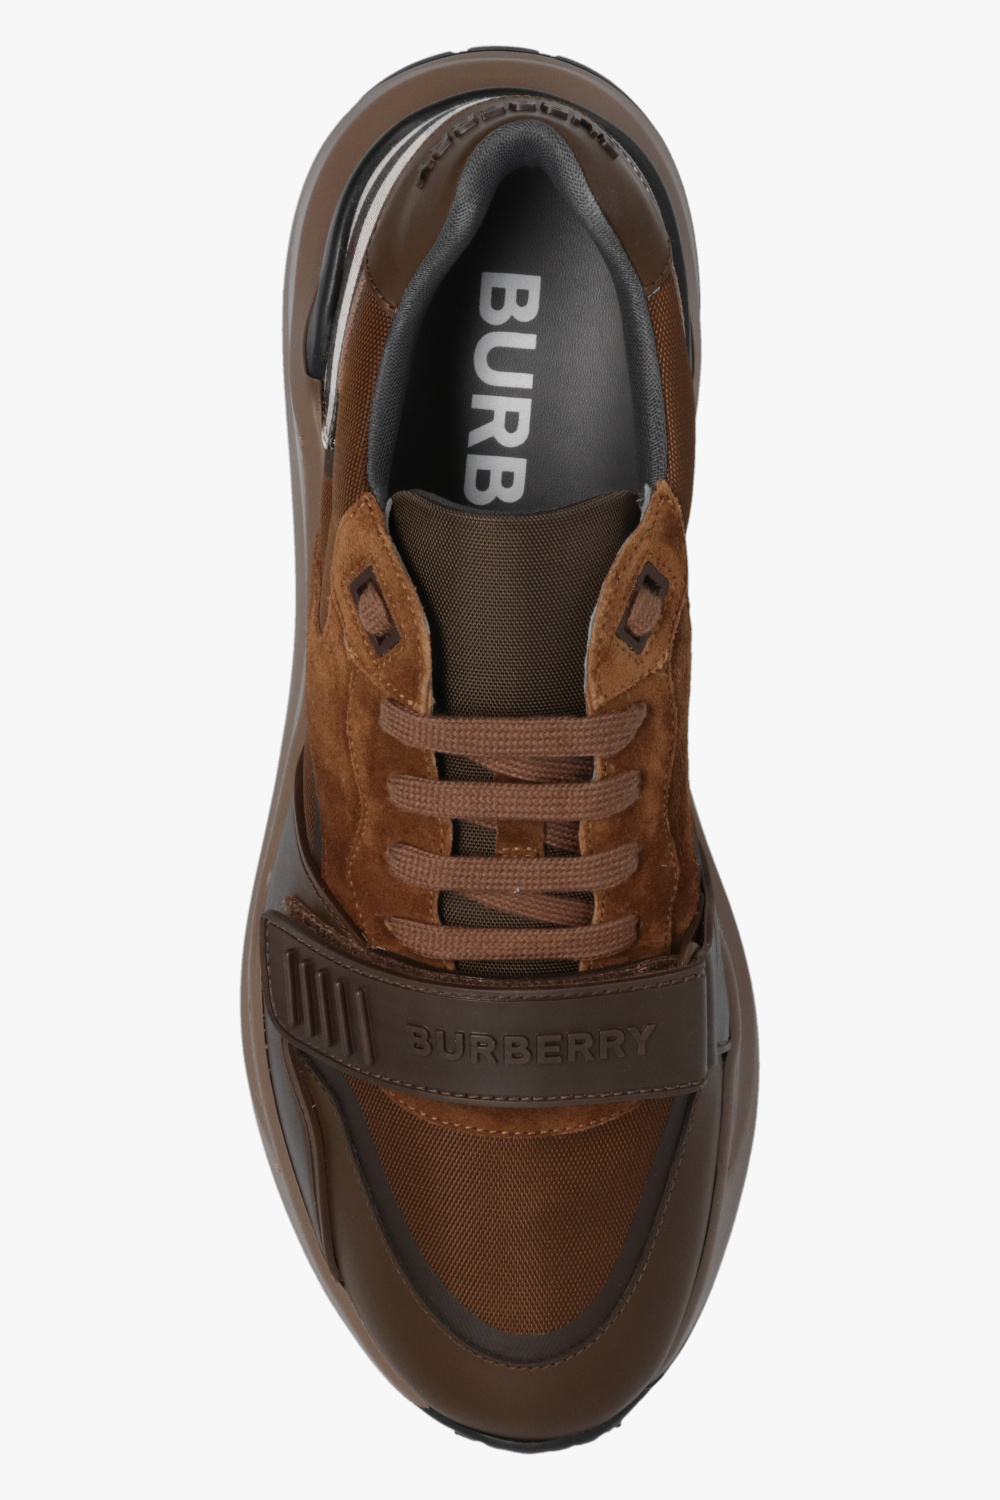 Burberry ‘Ramsey’ sneakers